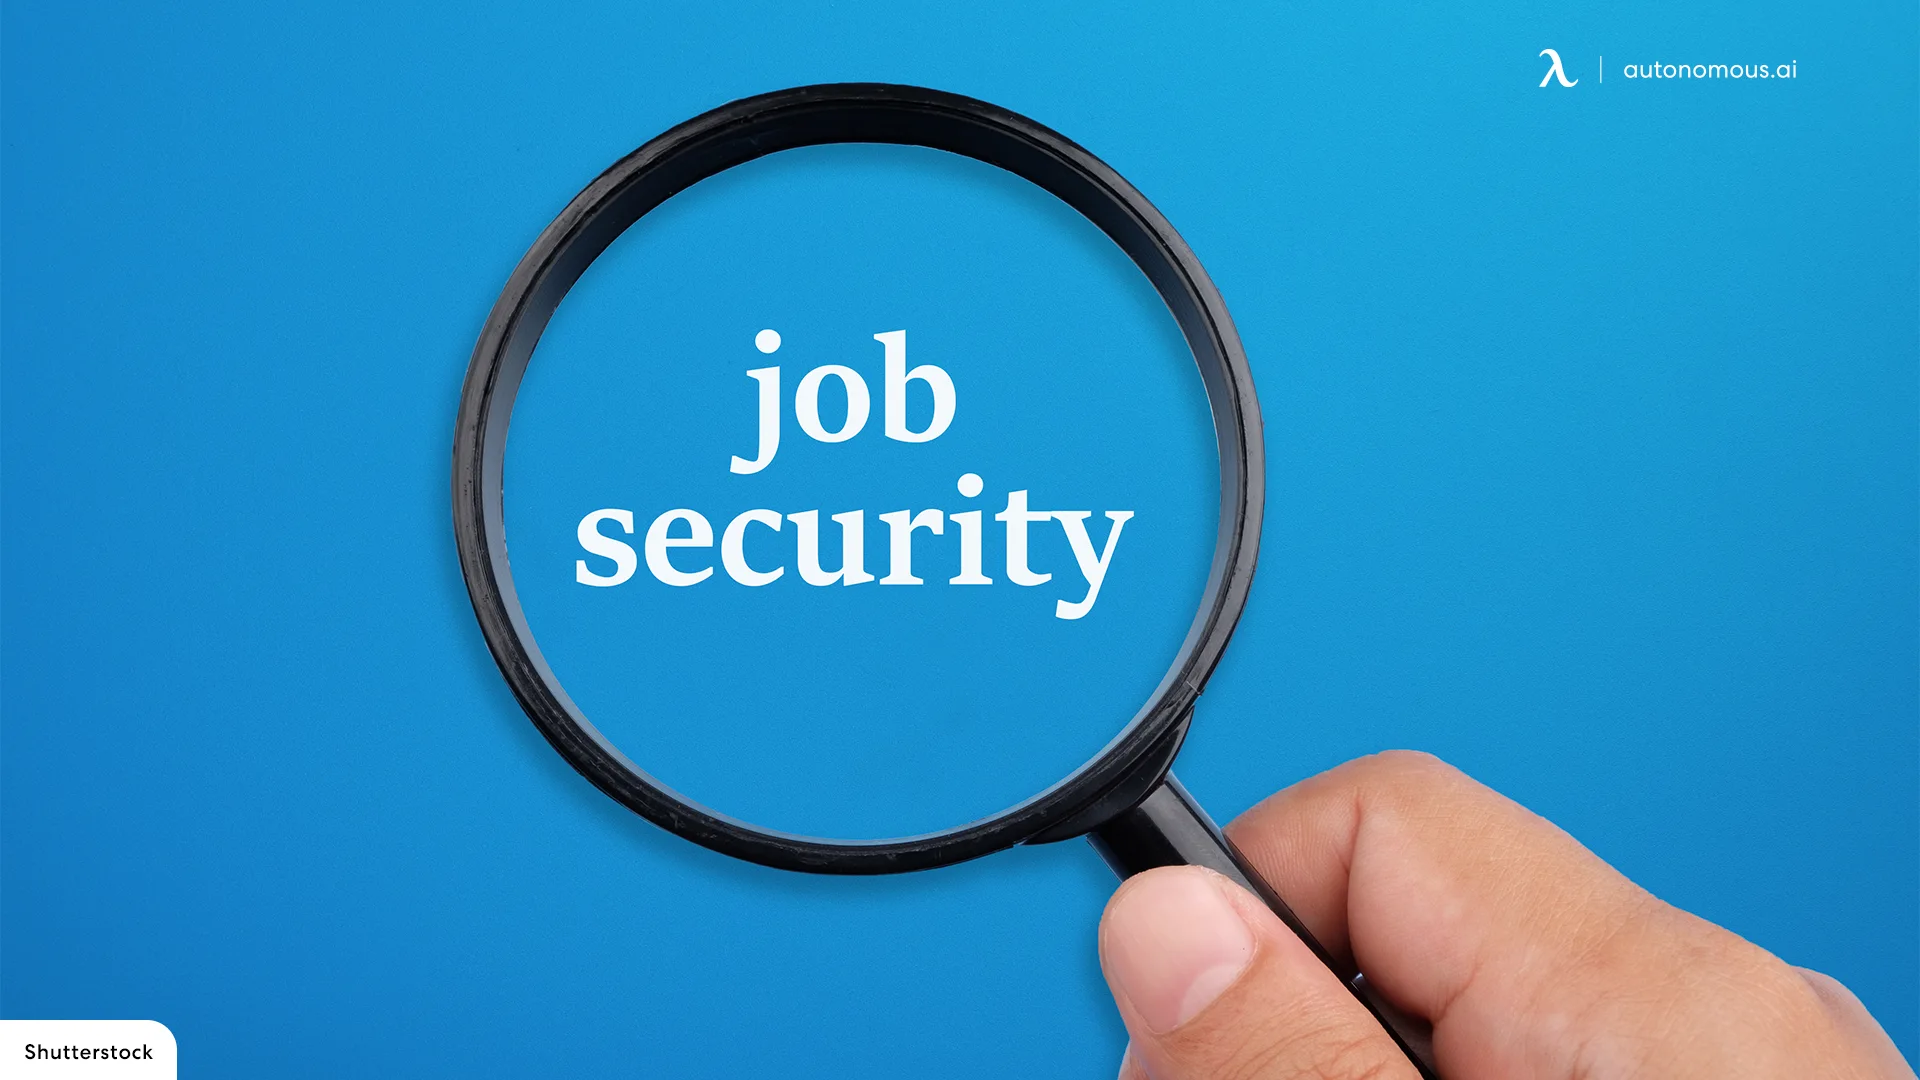 Job Security government employee benefits